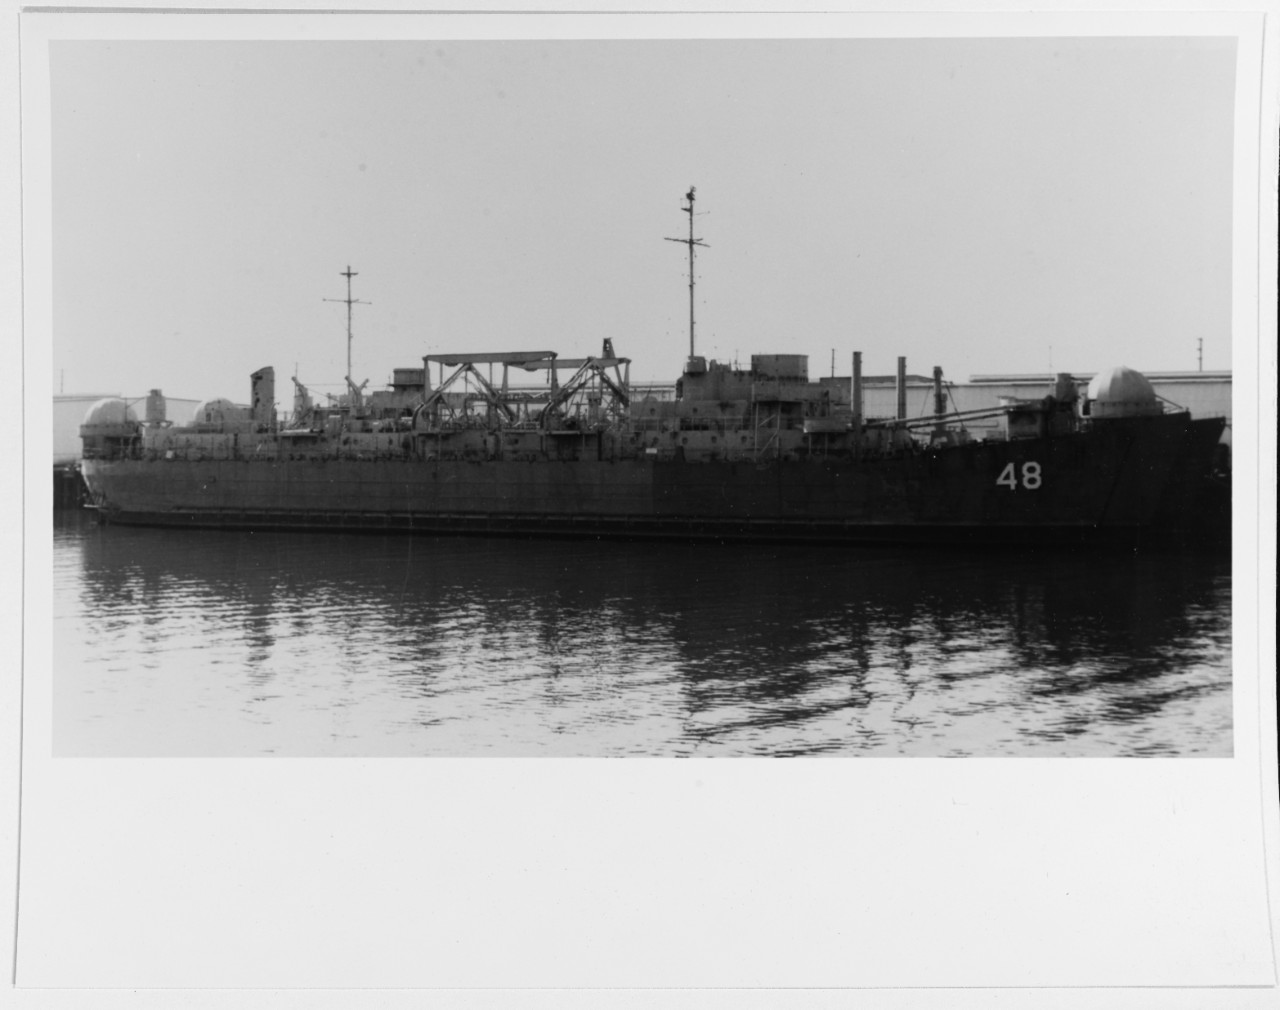 USS VANDERBURGH (APB-48)